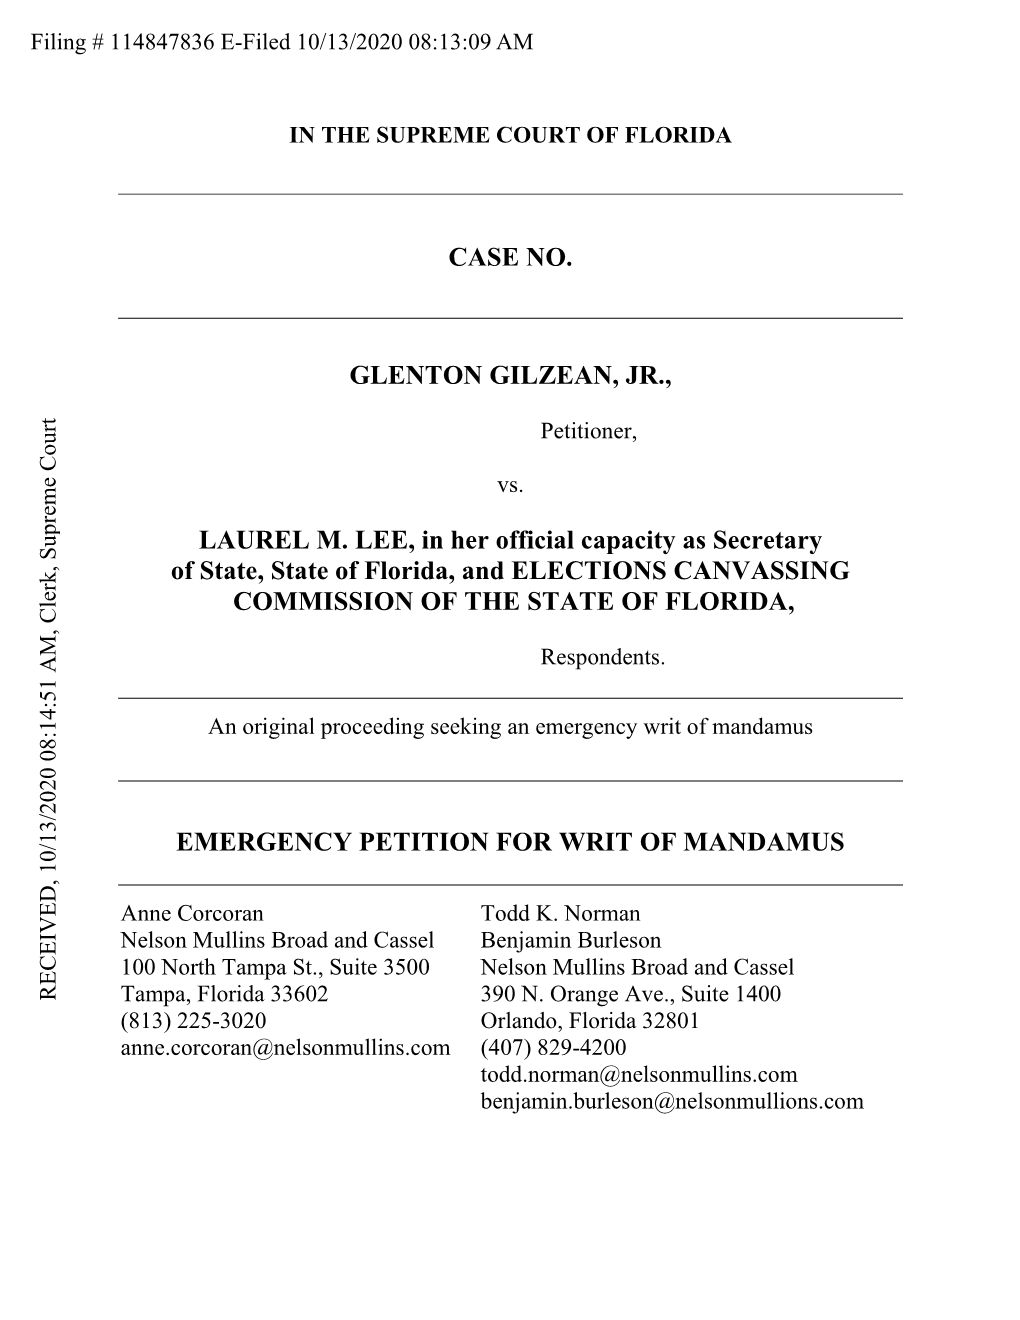 CASE NO. GLENTON GILZEAN, JR., LAUREL M. LEE, in Her Official